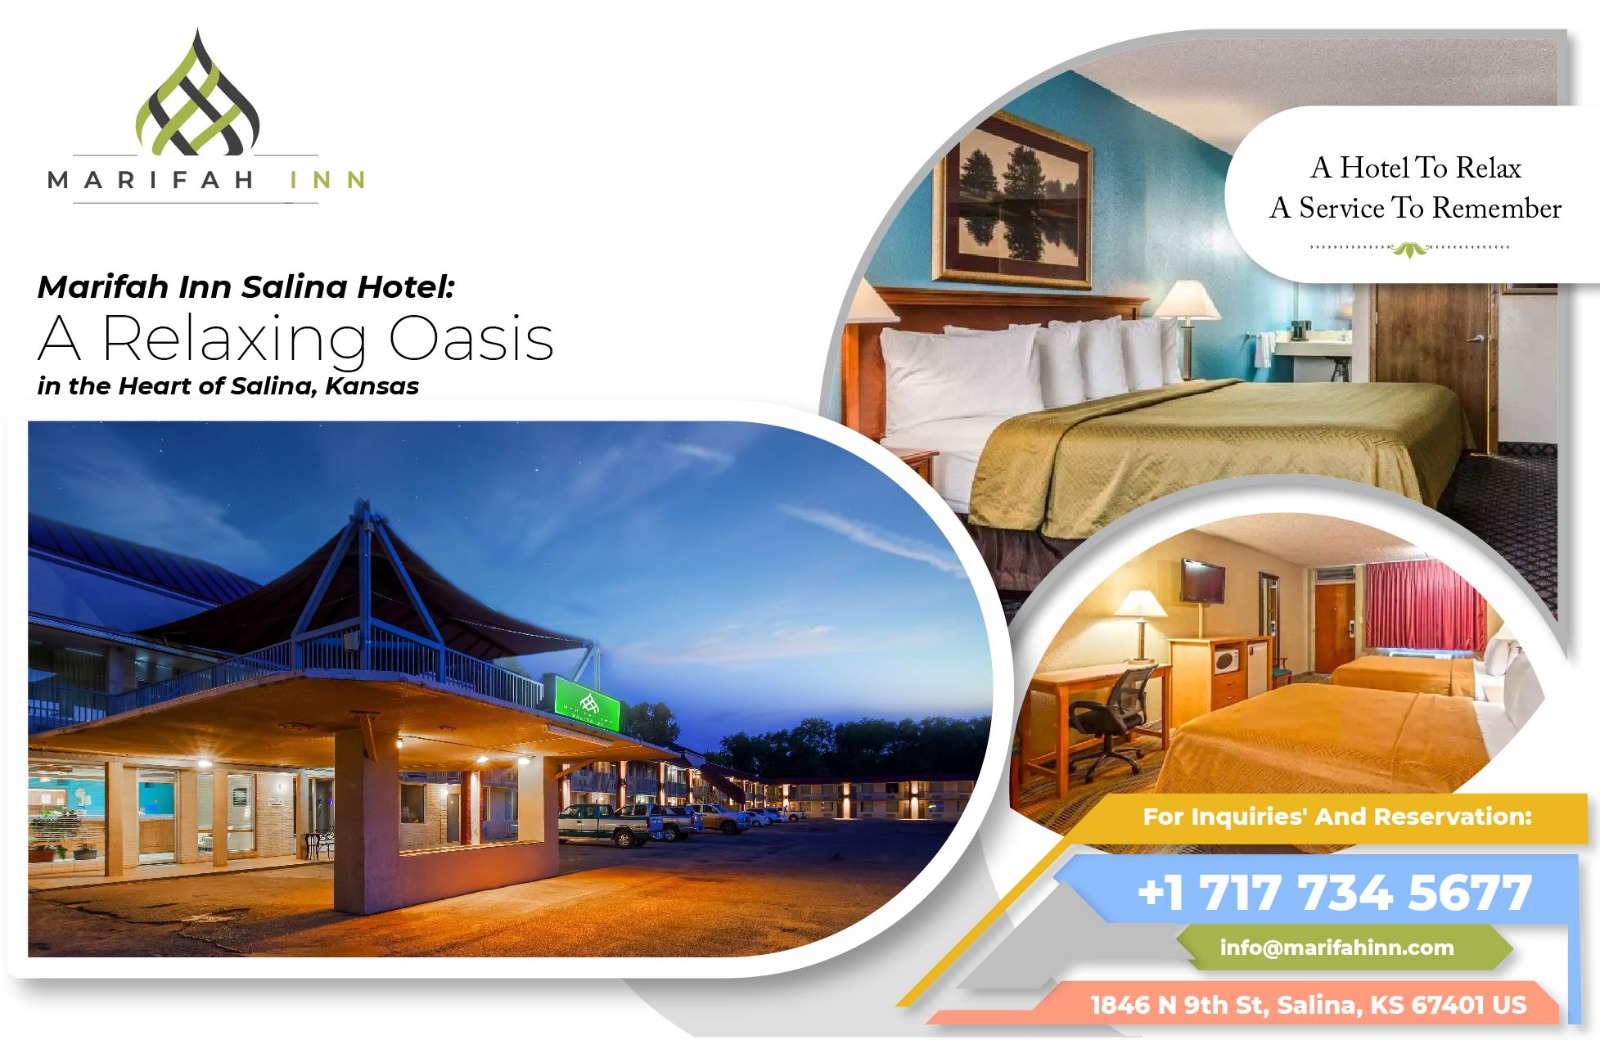 Marifah Inn Salina Hotel A Relaxing Oasis in the Heart of Salina